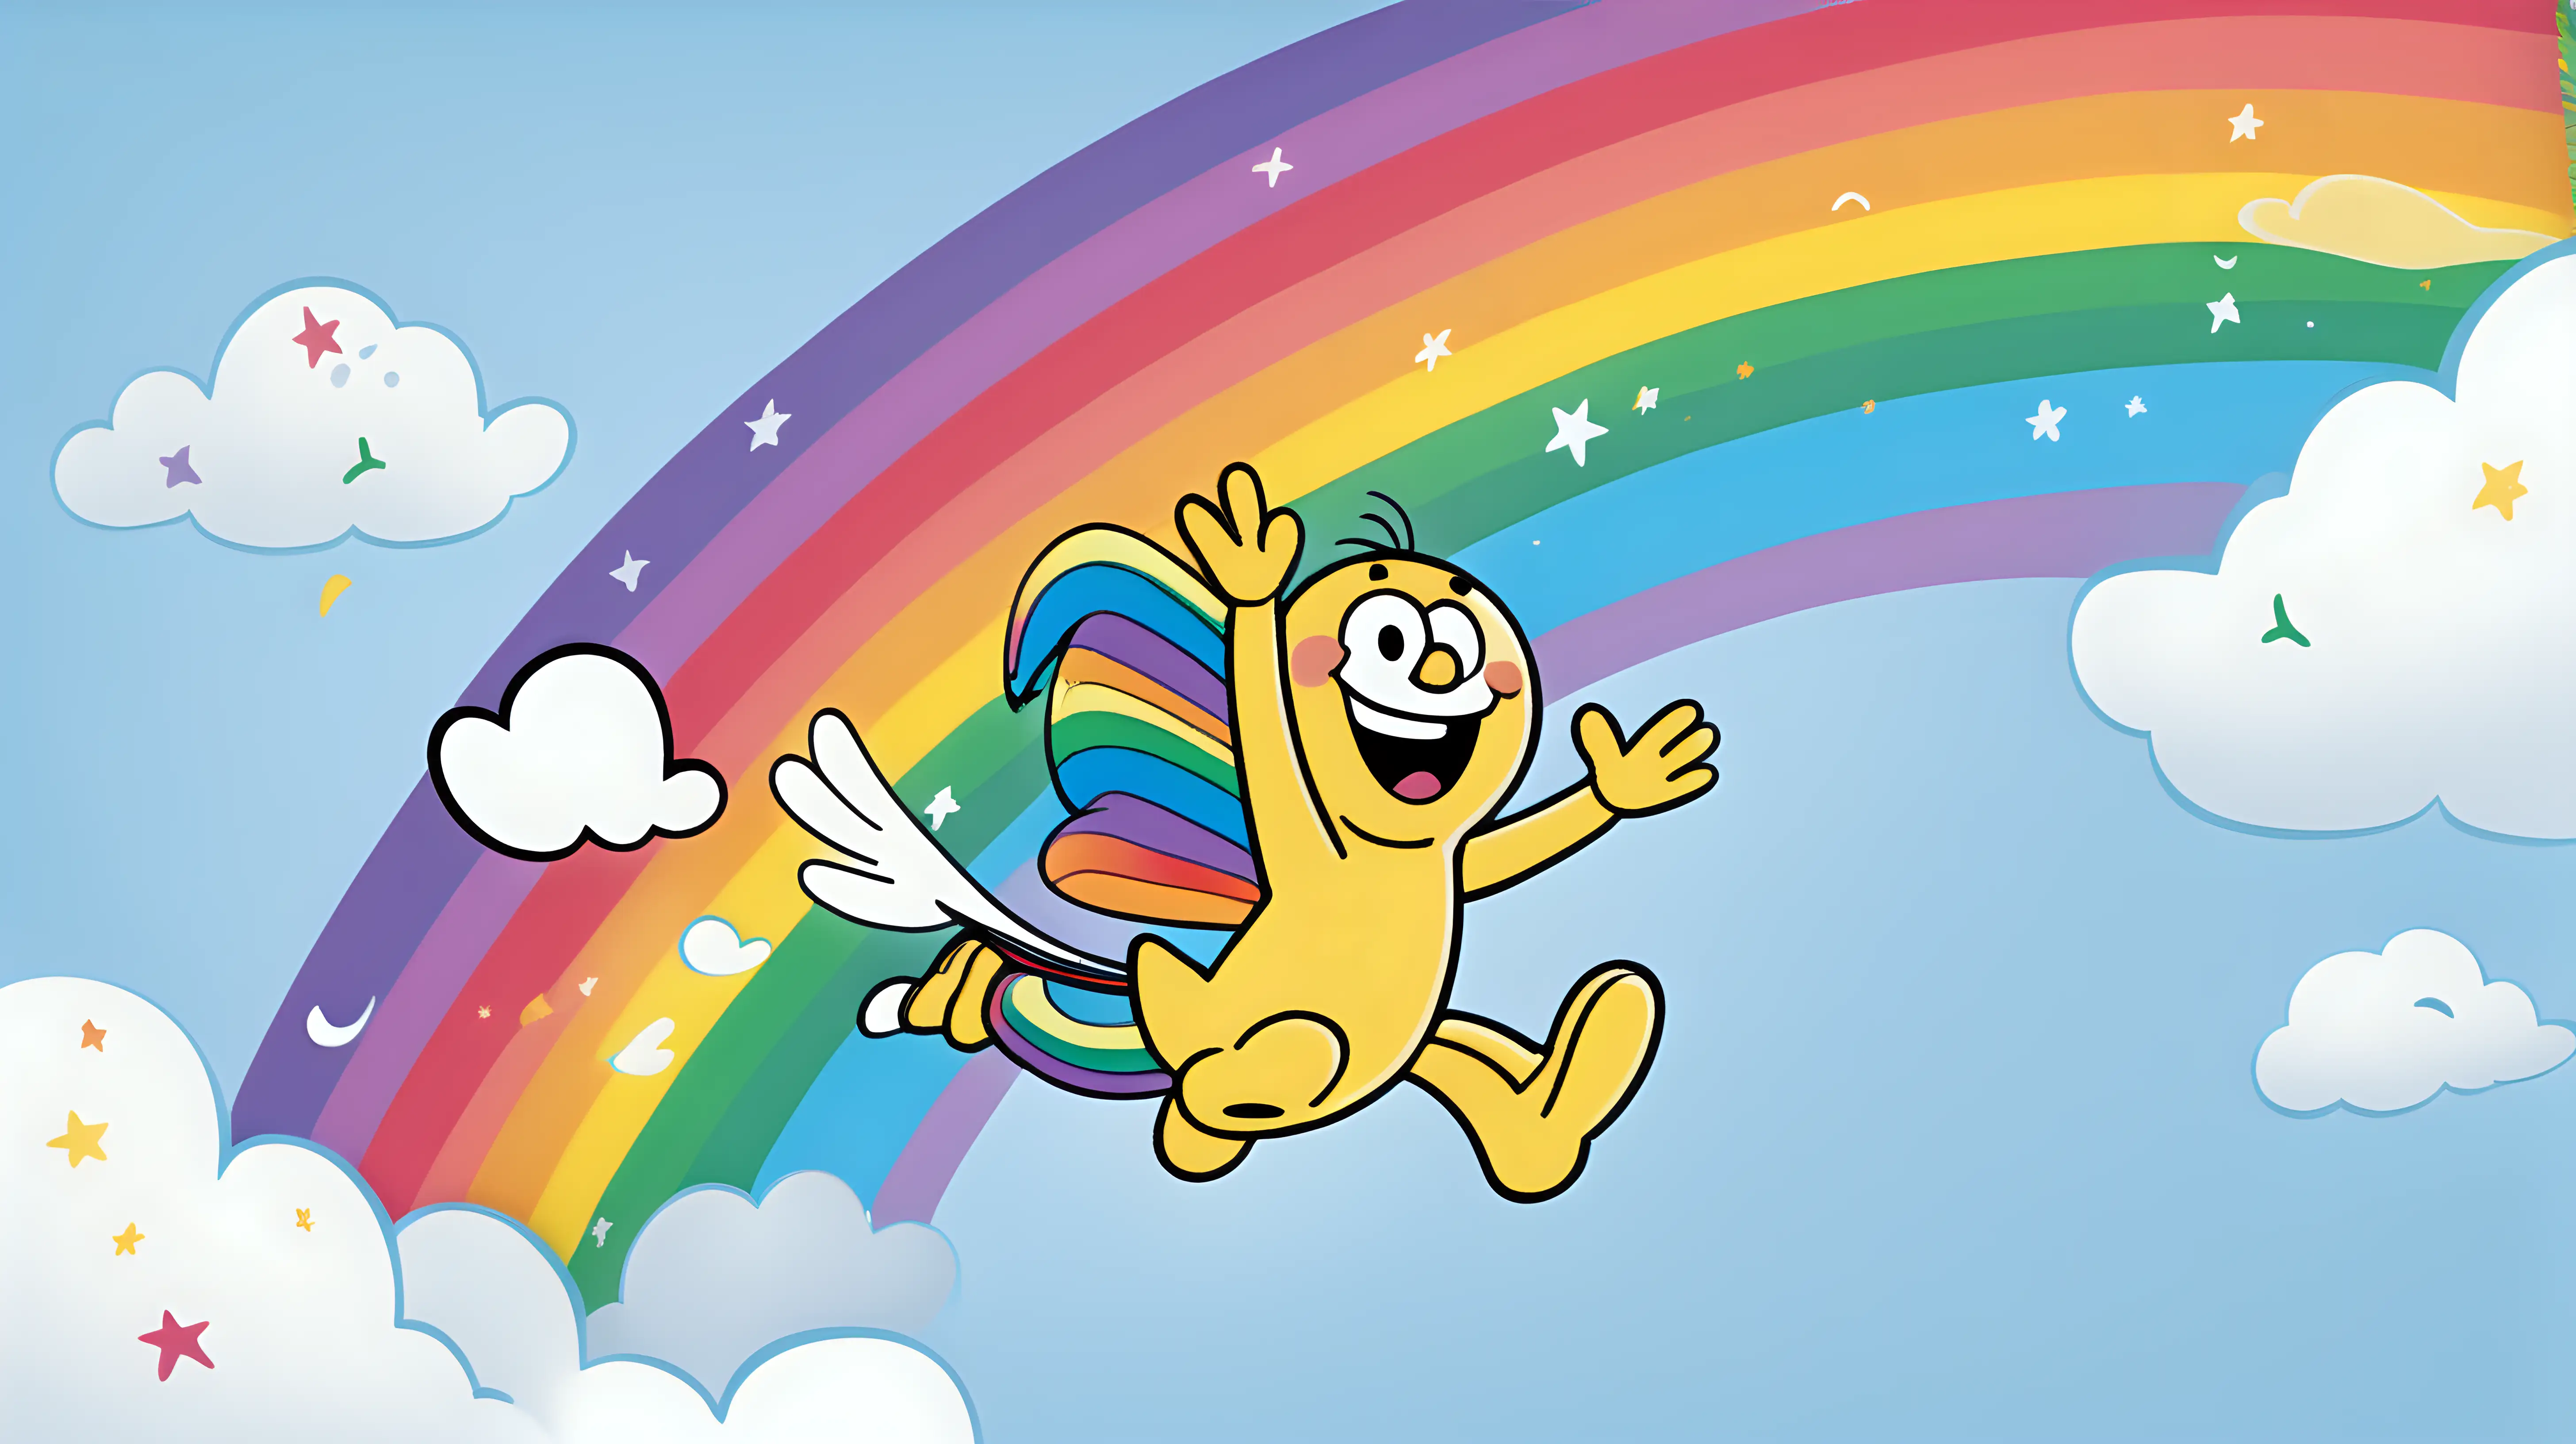 Joyful Cartoon Character Flying on Rainbow Trail